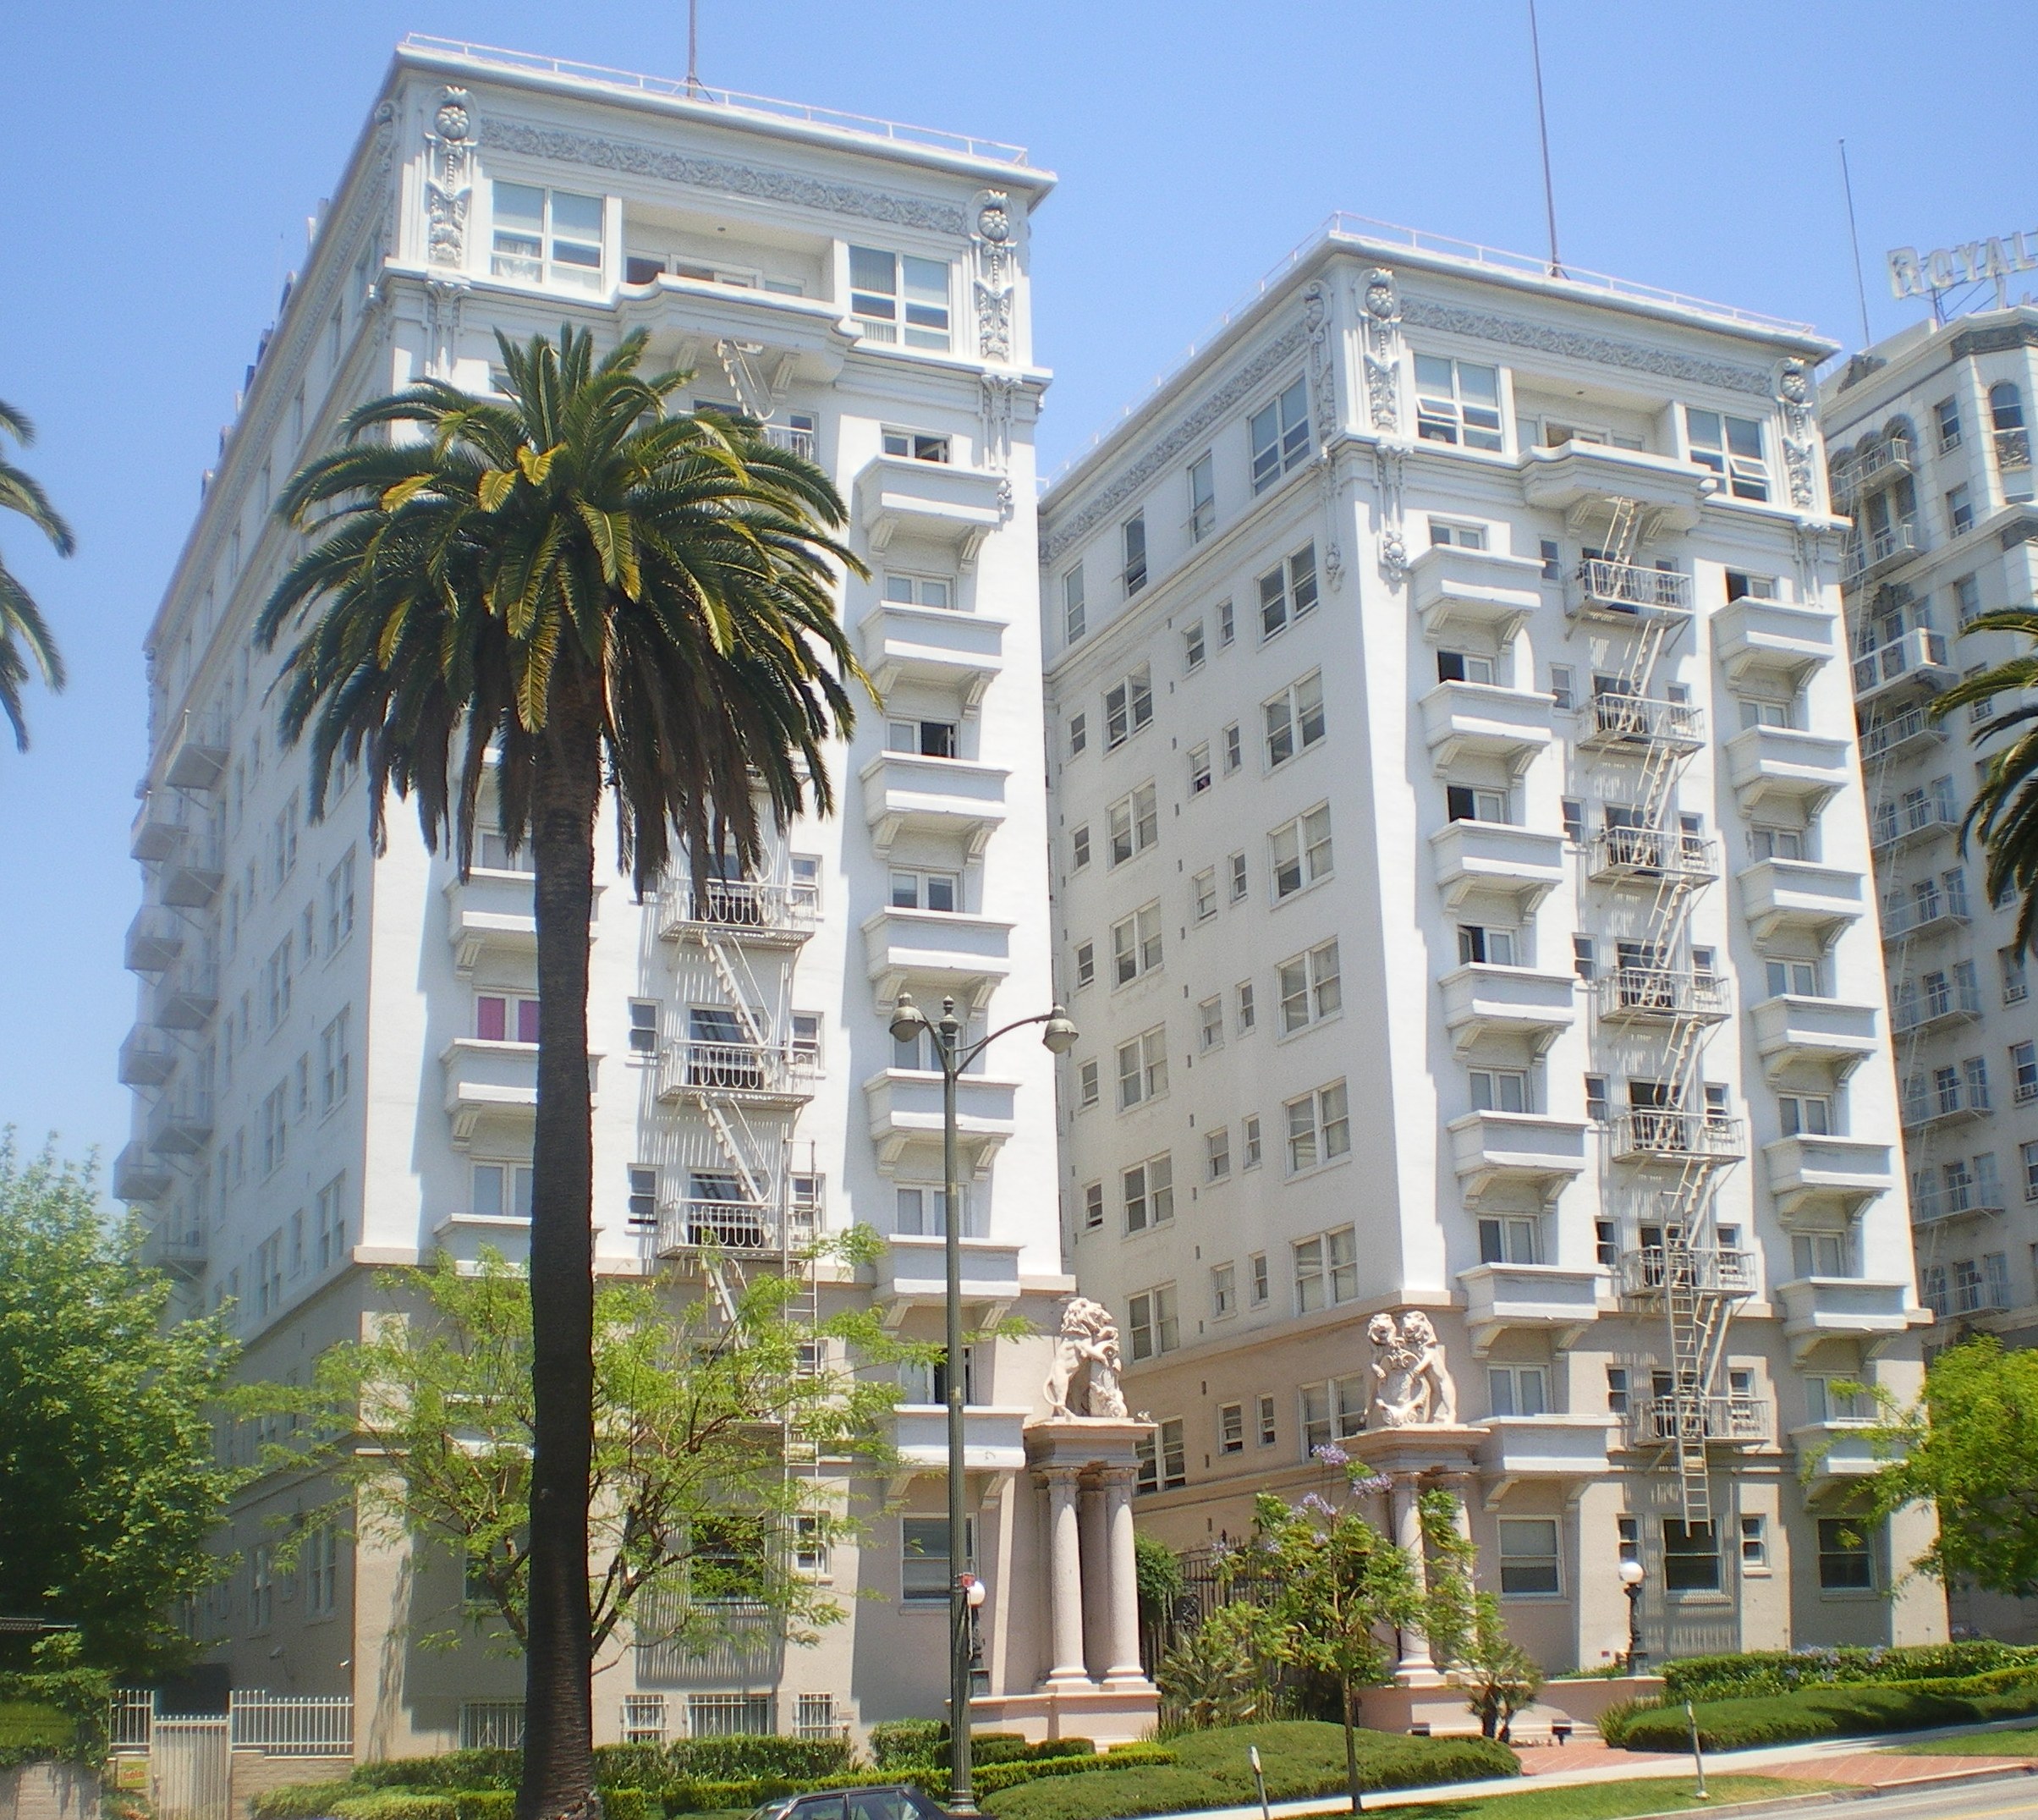 File:Bryson Apartment Hotel, Los Angeles.JPG - Wikimedia Commons